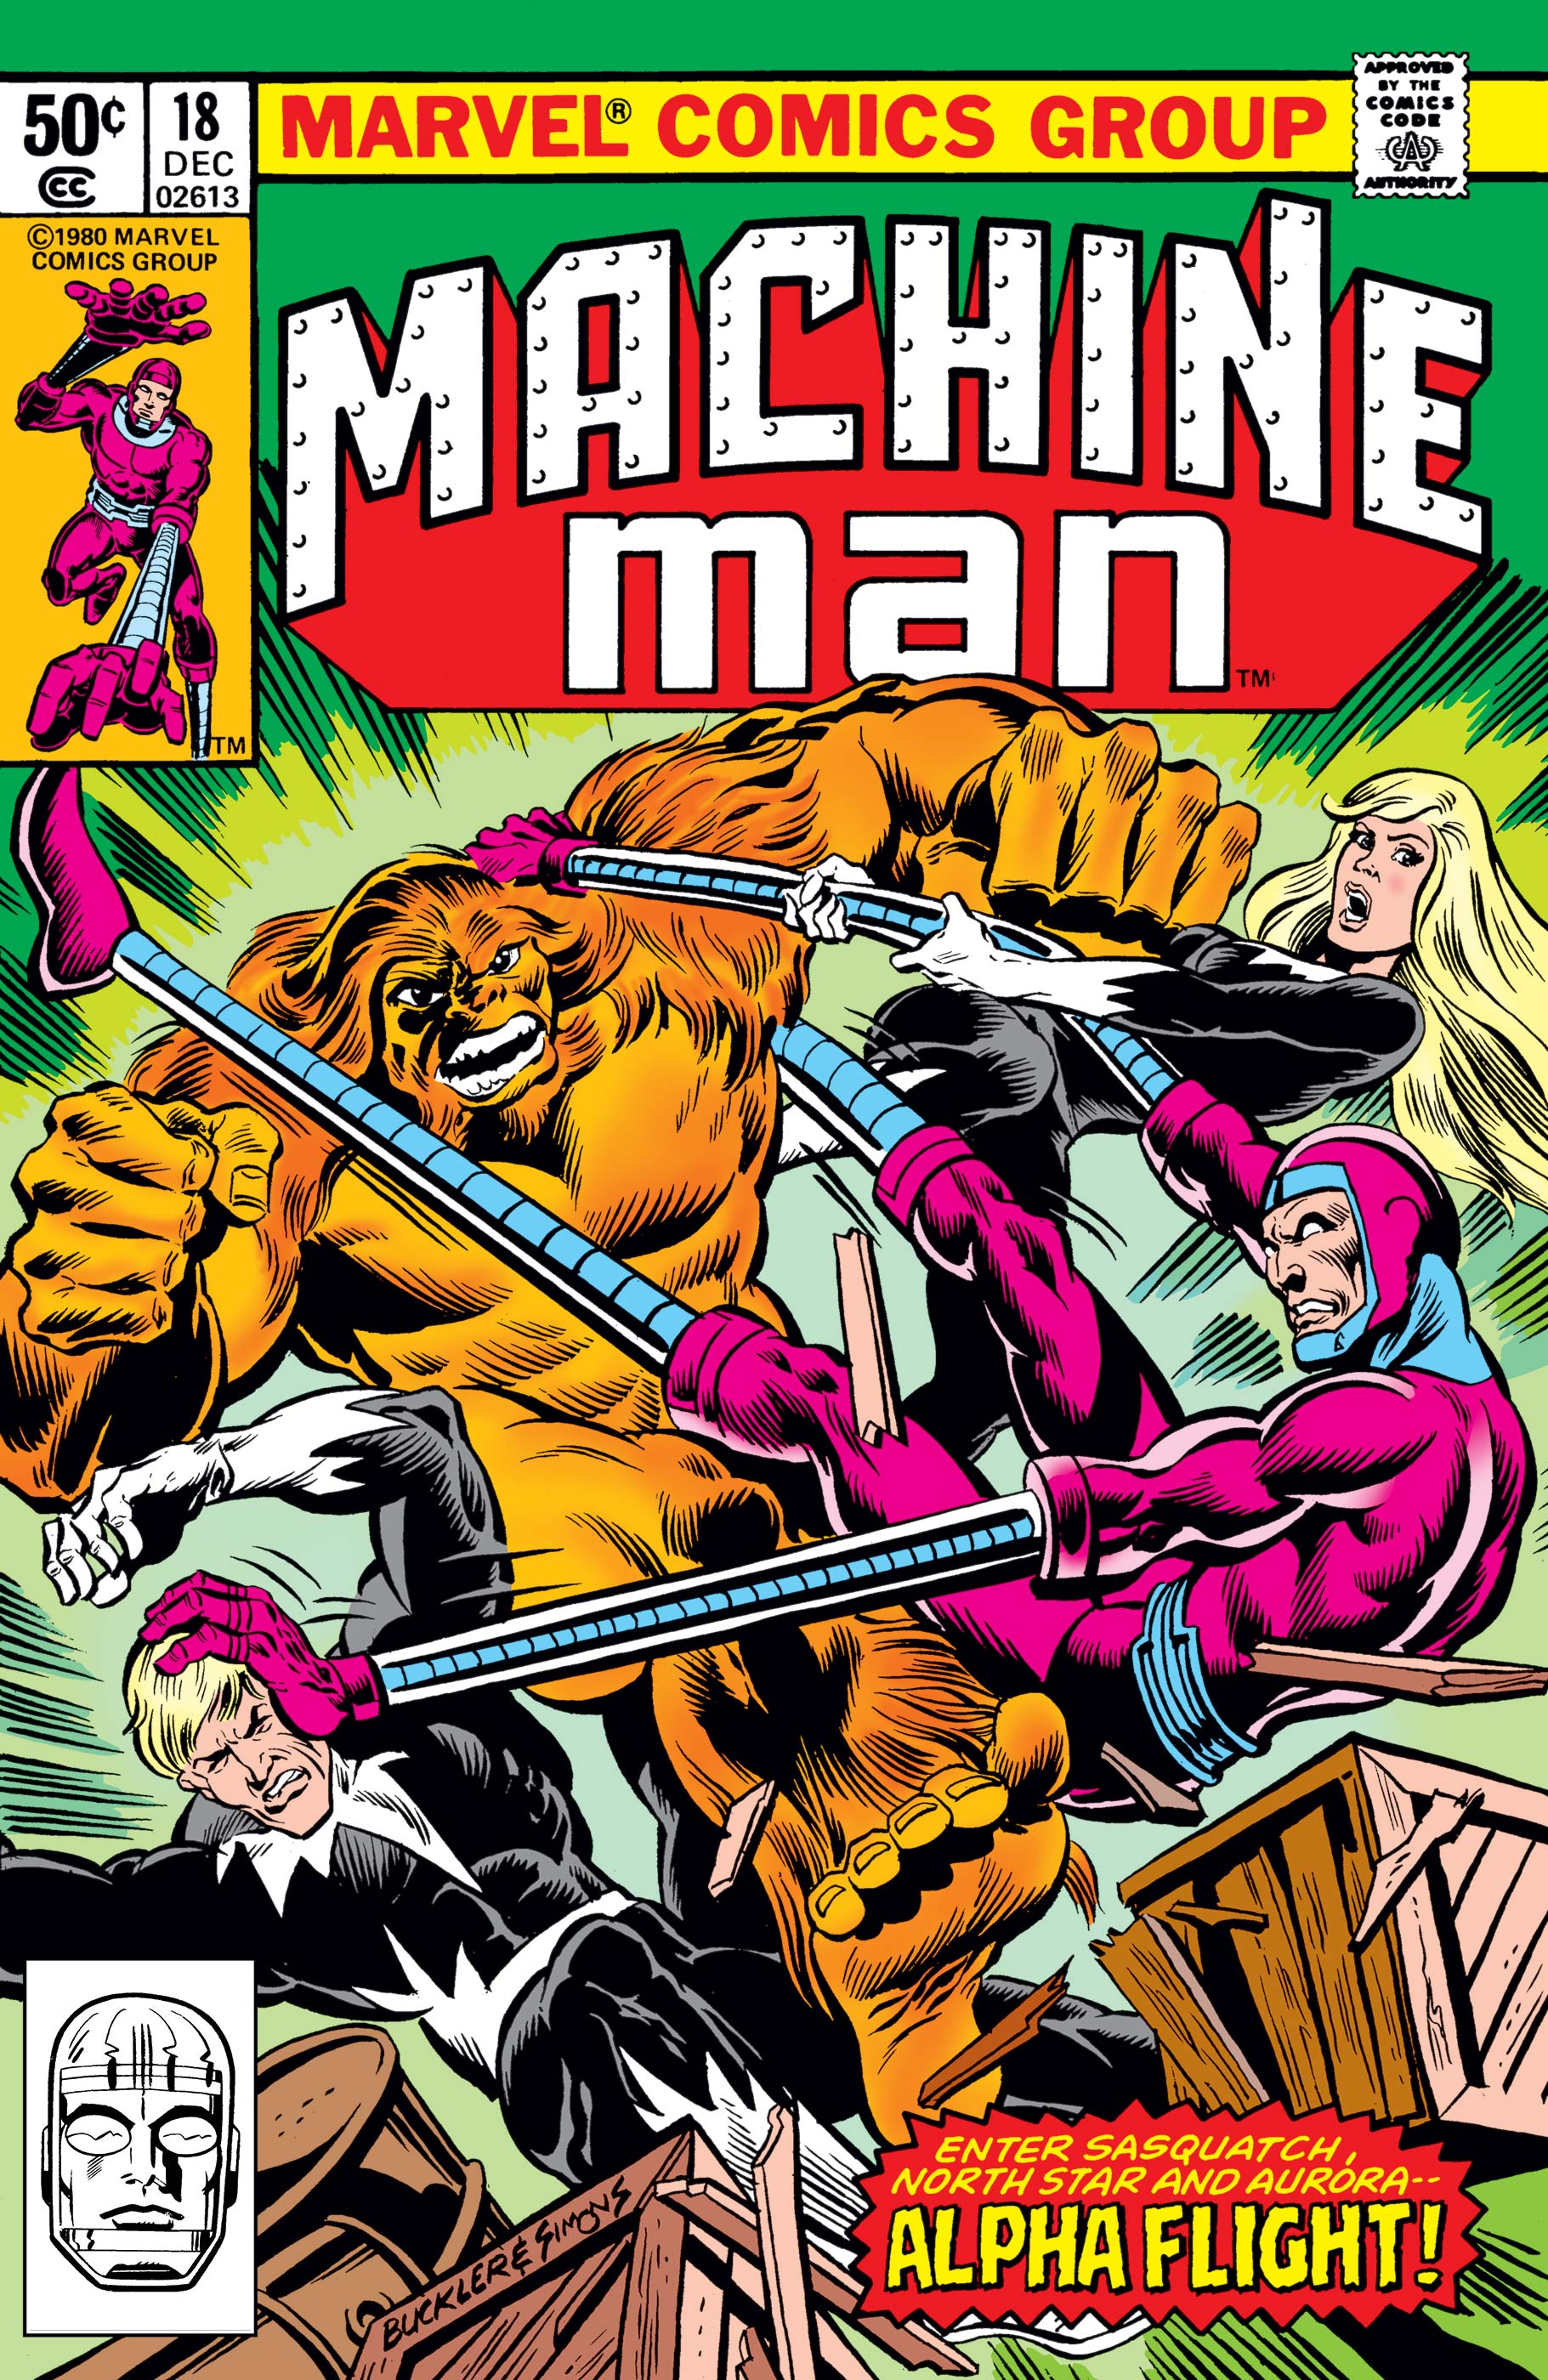 Machine Man (1978) #18